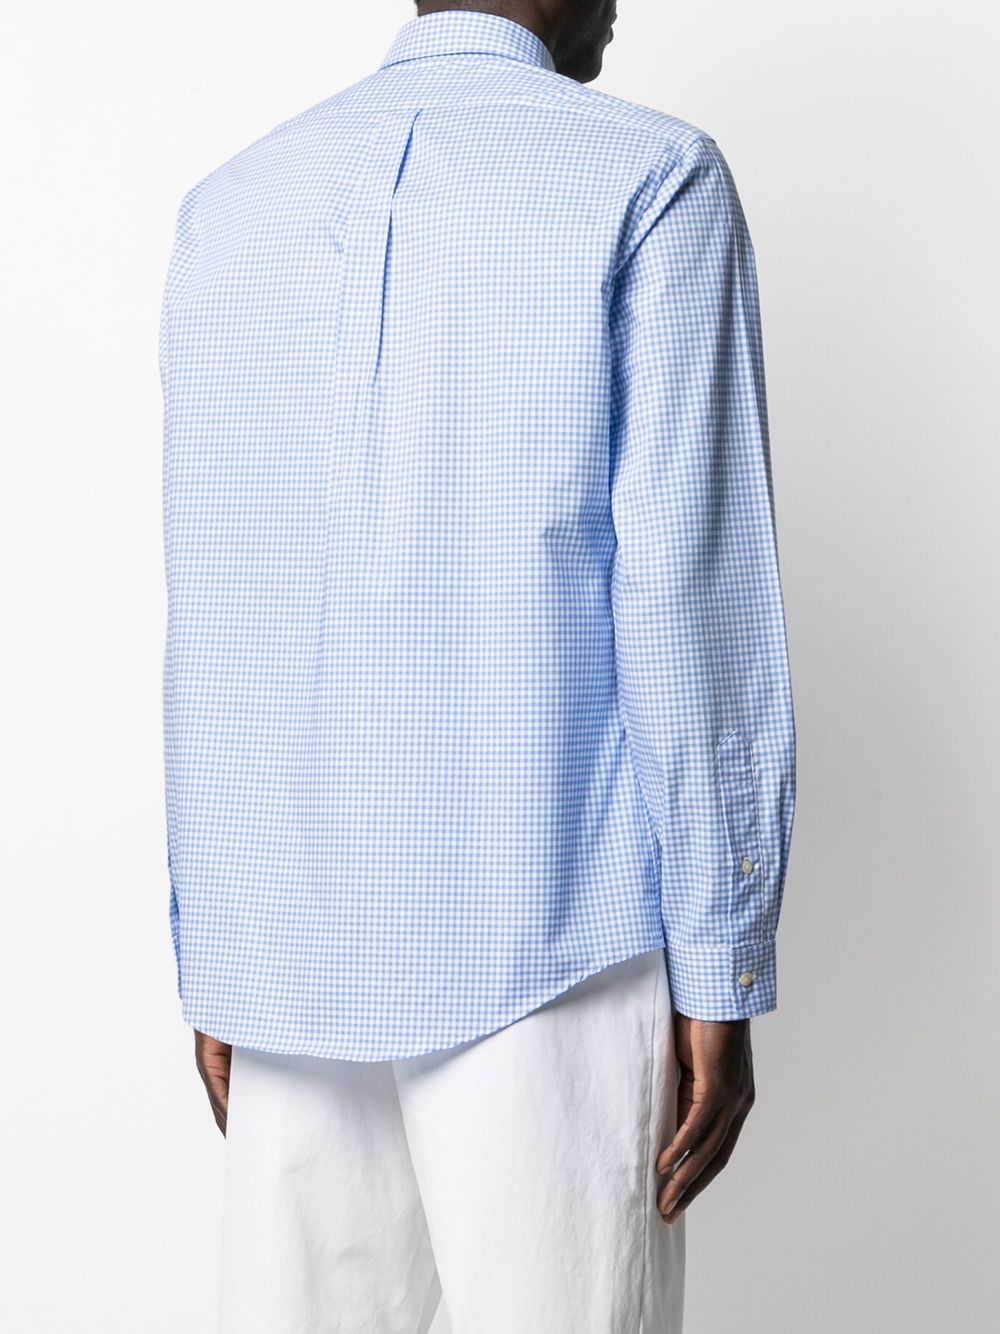 Polo Ralph Lauren Checked Cotton Shirt - Farfetch